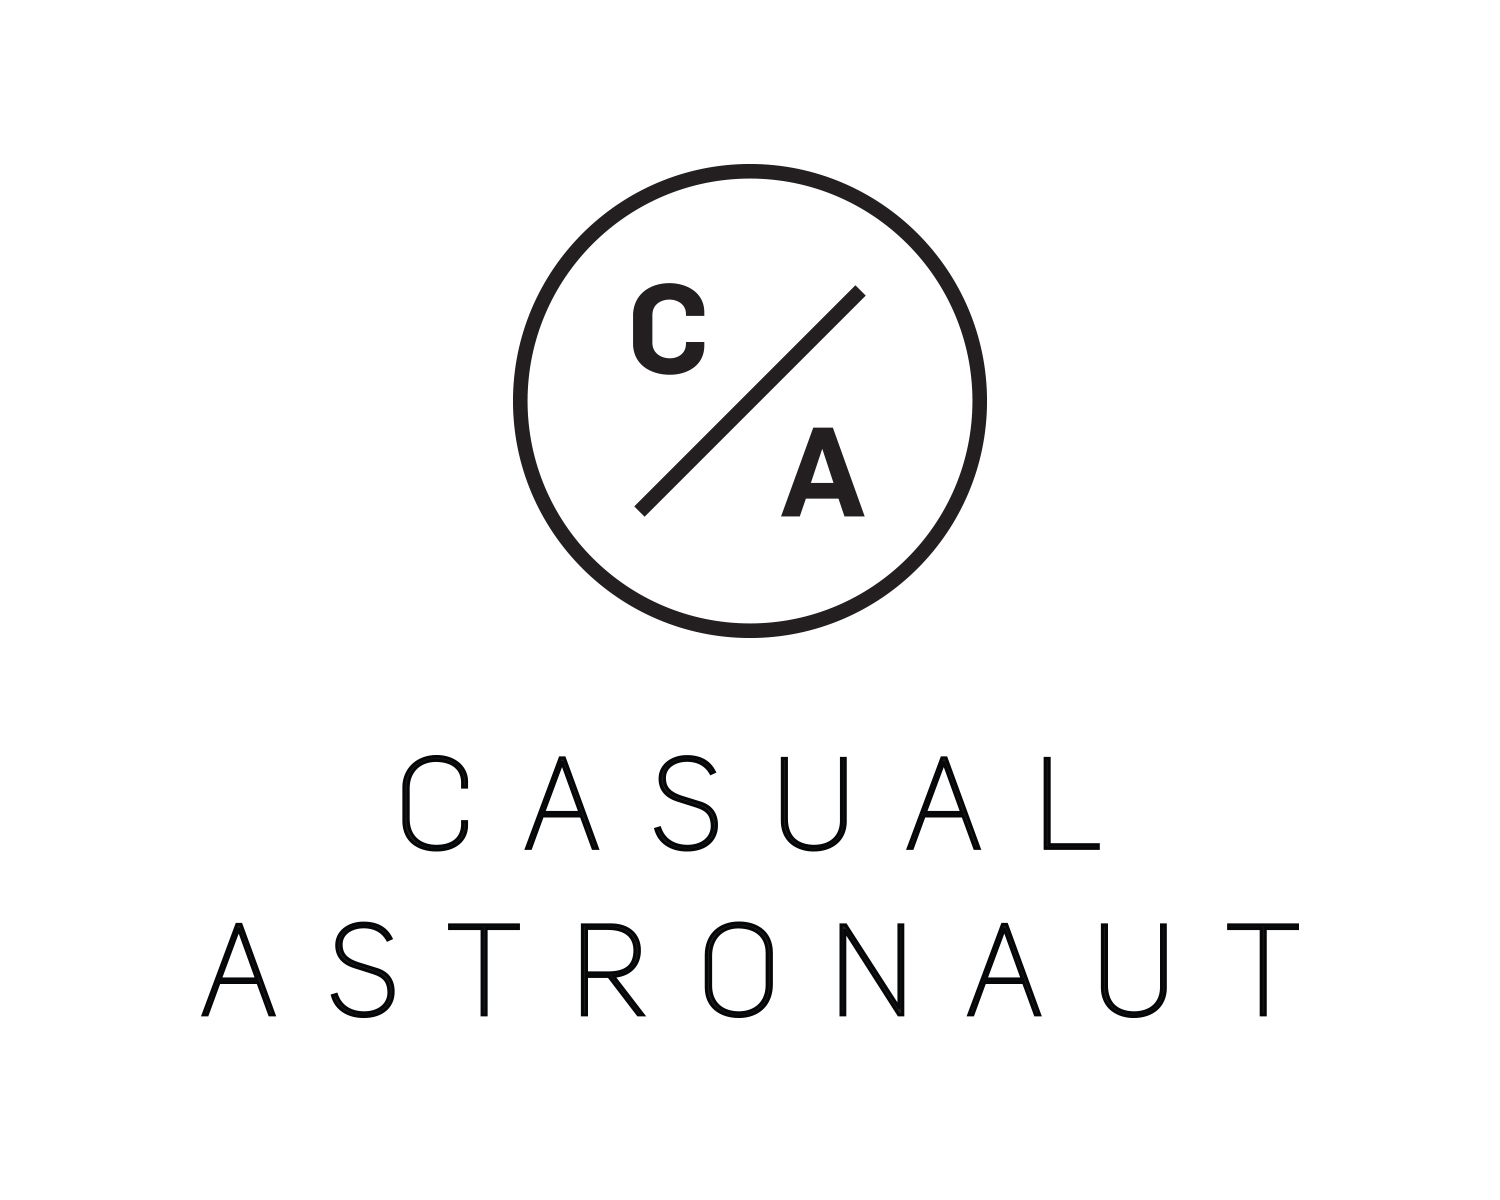 Casual Astronaut